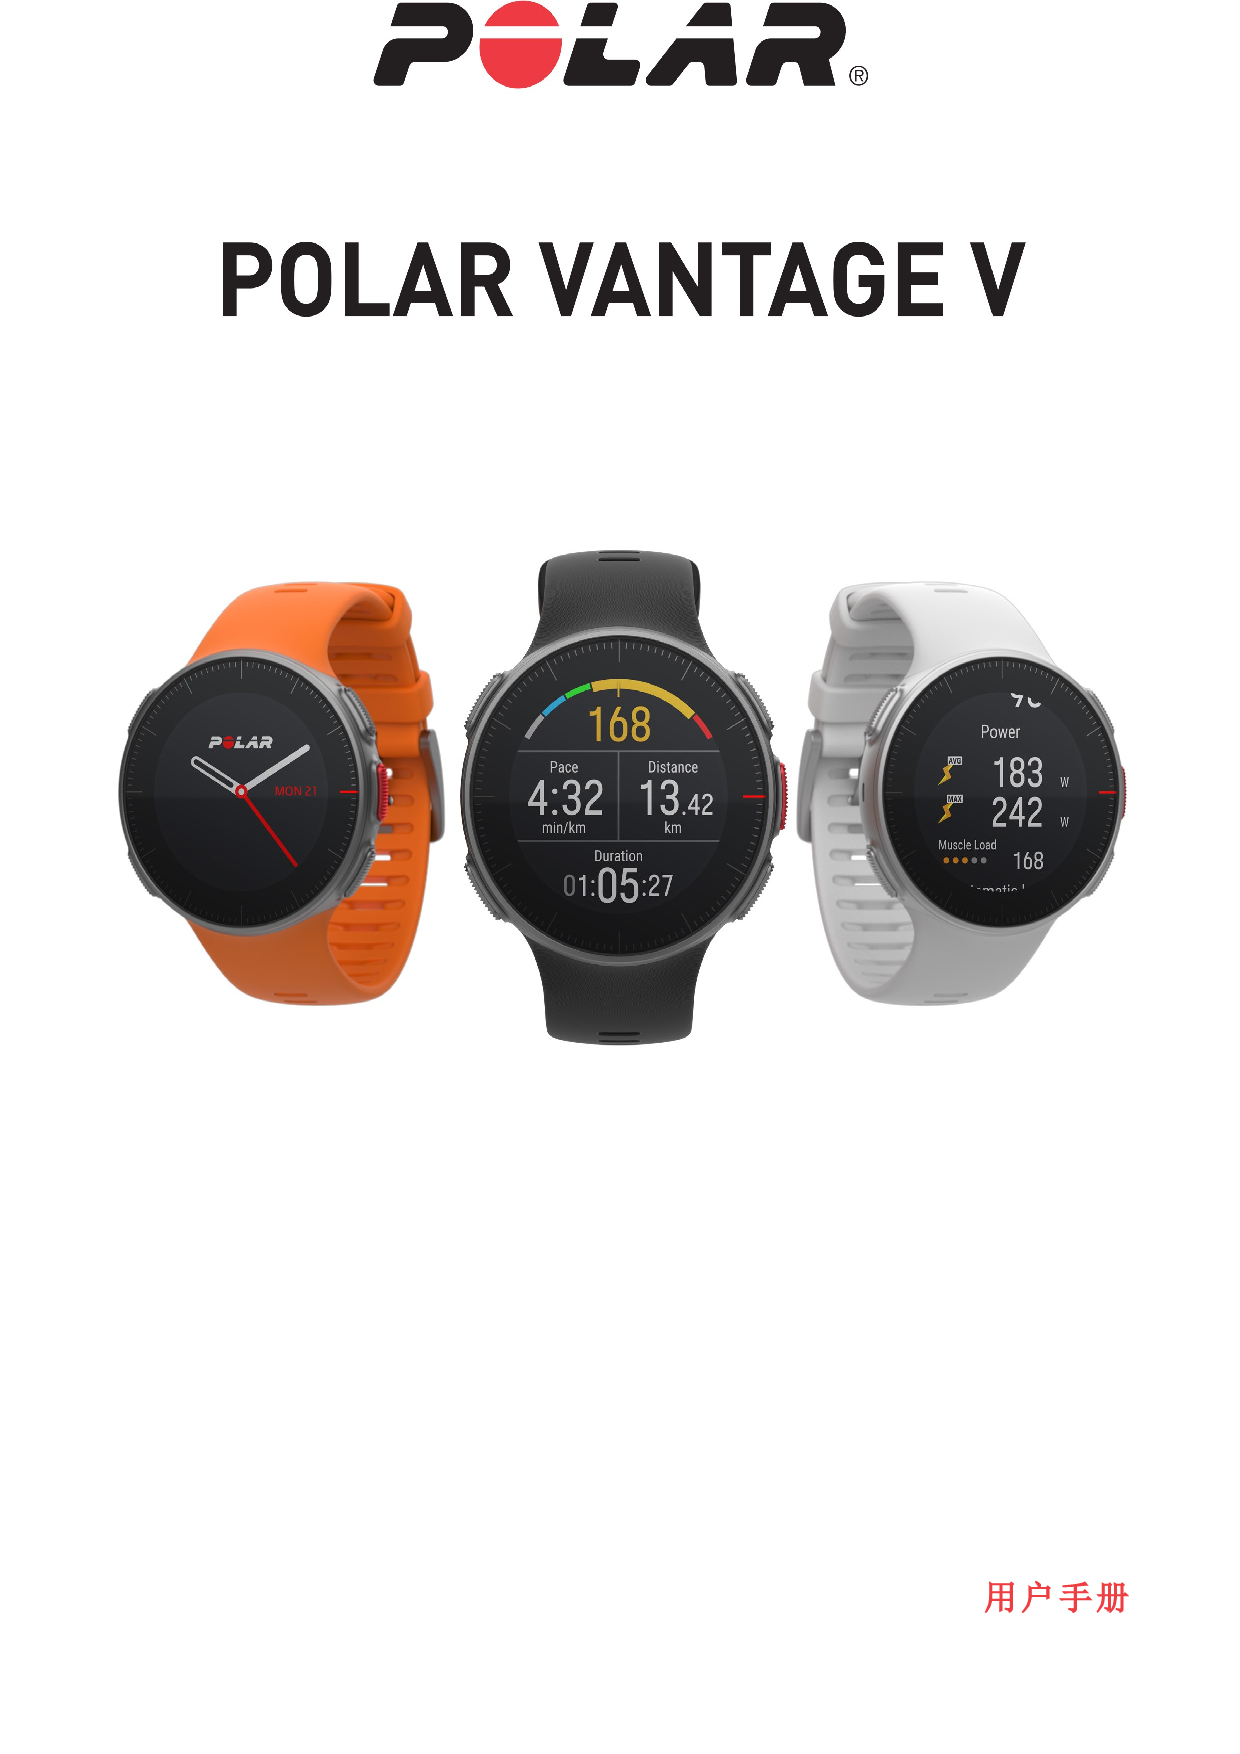 Polar VANTAGE V 用户手册 封面